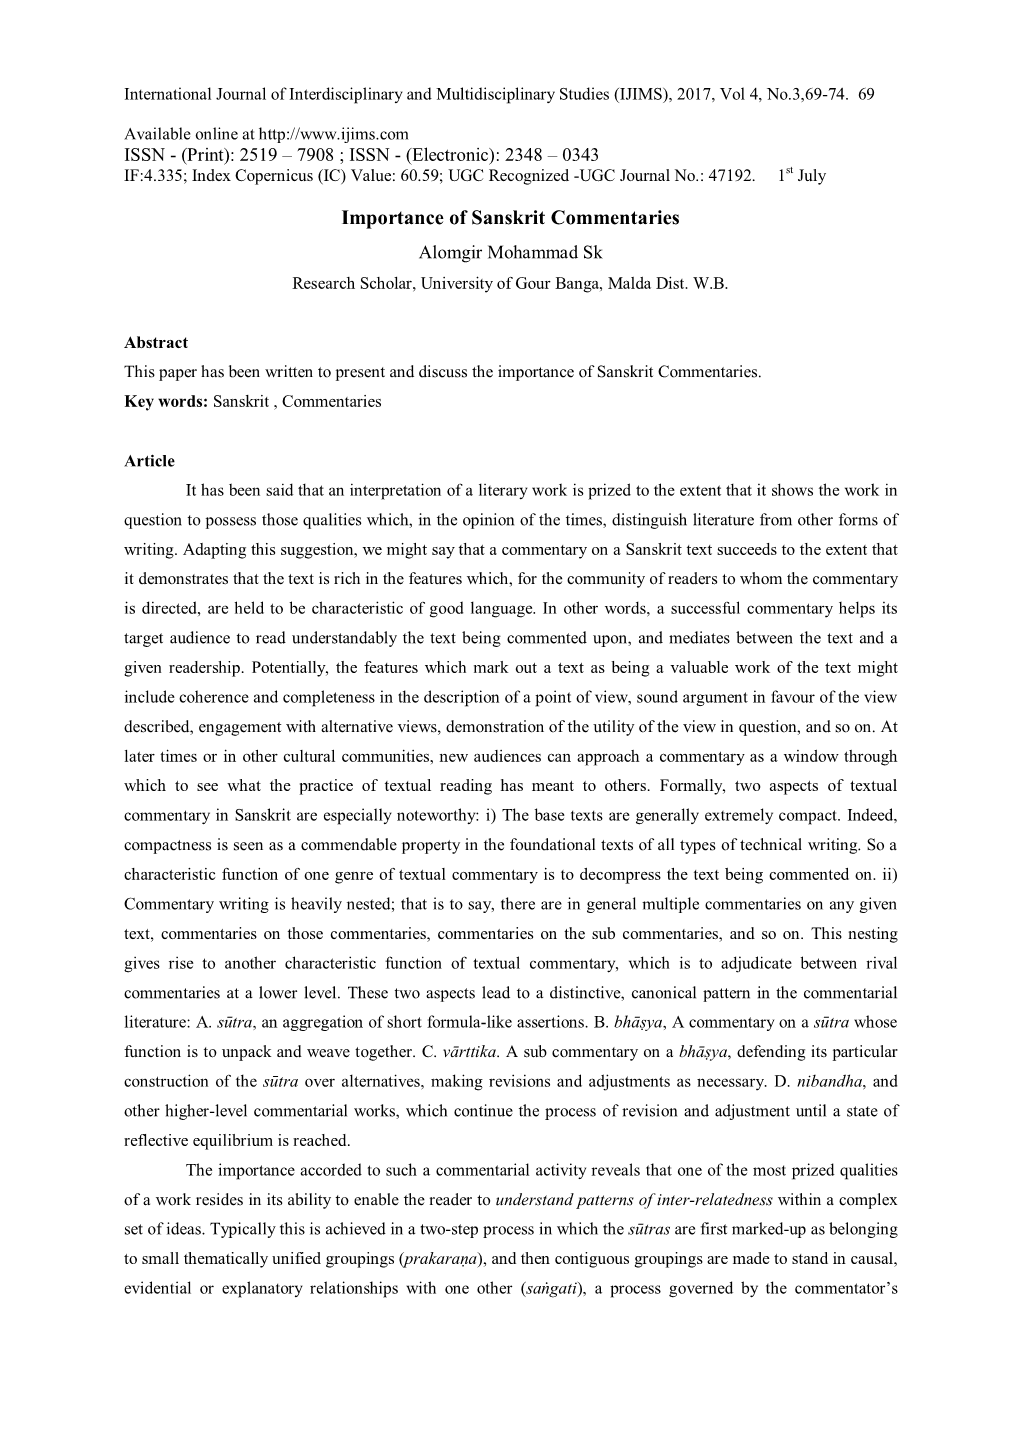 Importance of Sanskrit Commentaries Alomgir Mohammad Sk Research Scholar, University of Gour Banga, Malda Dist